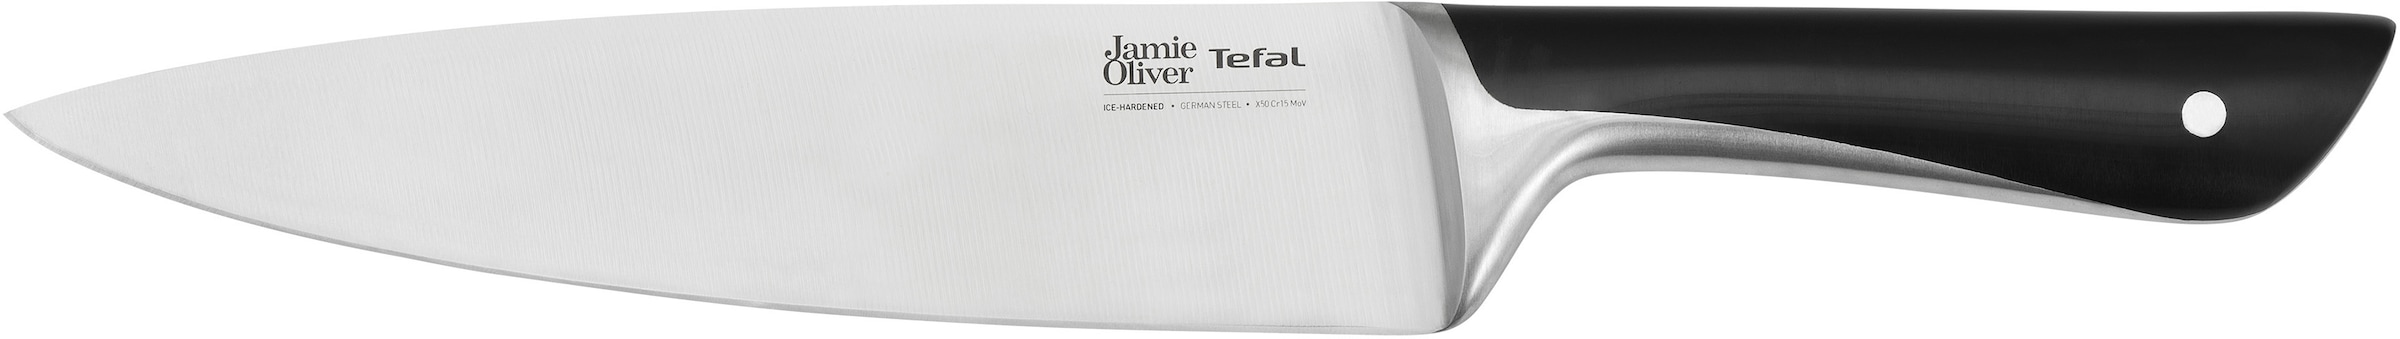 Tefal Kochmesser »Jamie Oliver K26701«, (1 tlg.), hohe Leistung, unverwechselbares Design, widerstandsfähig/langlebig